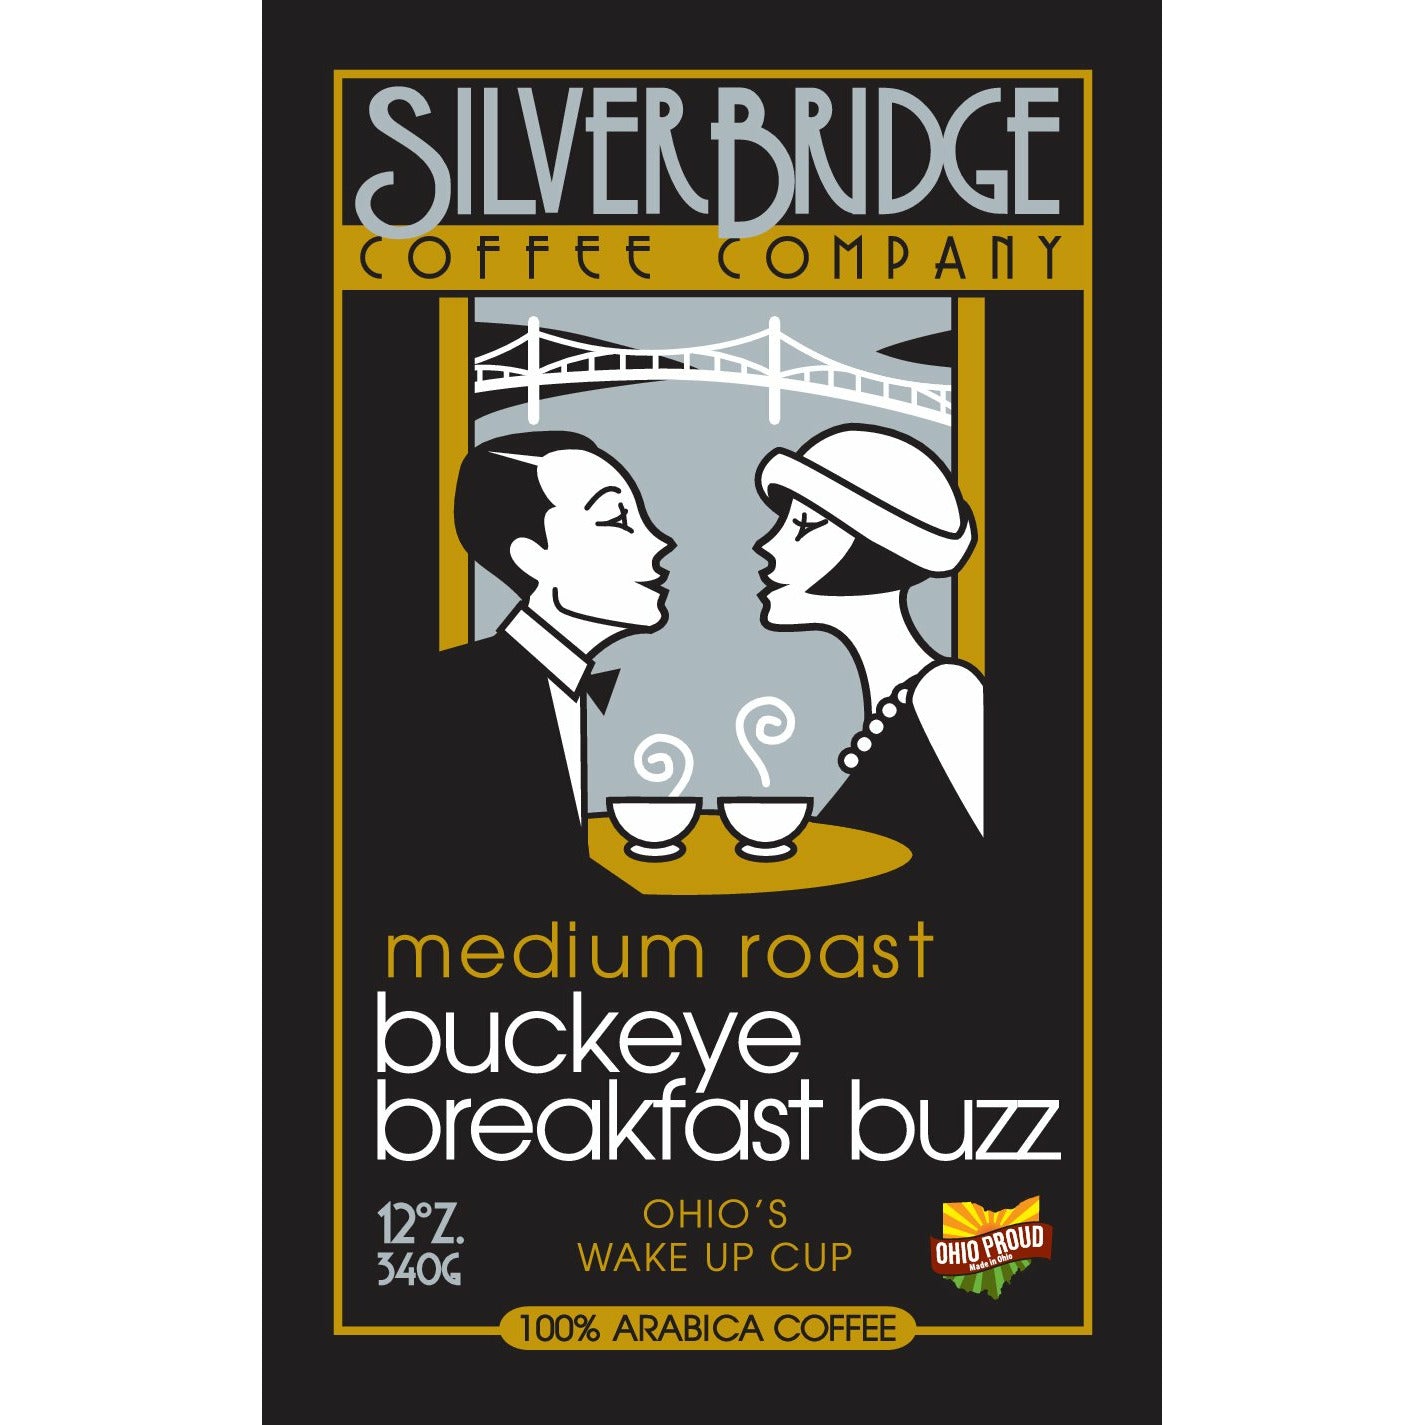 Silverbridge Coffee 12oz Ground